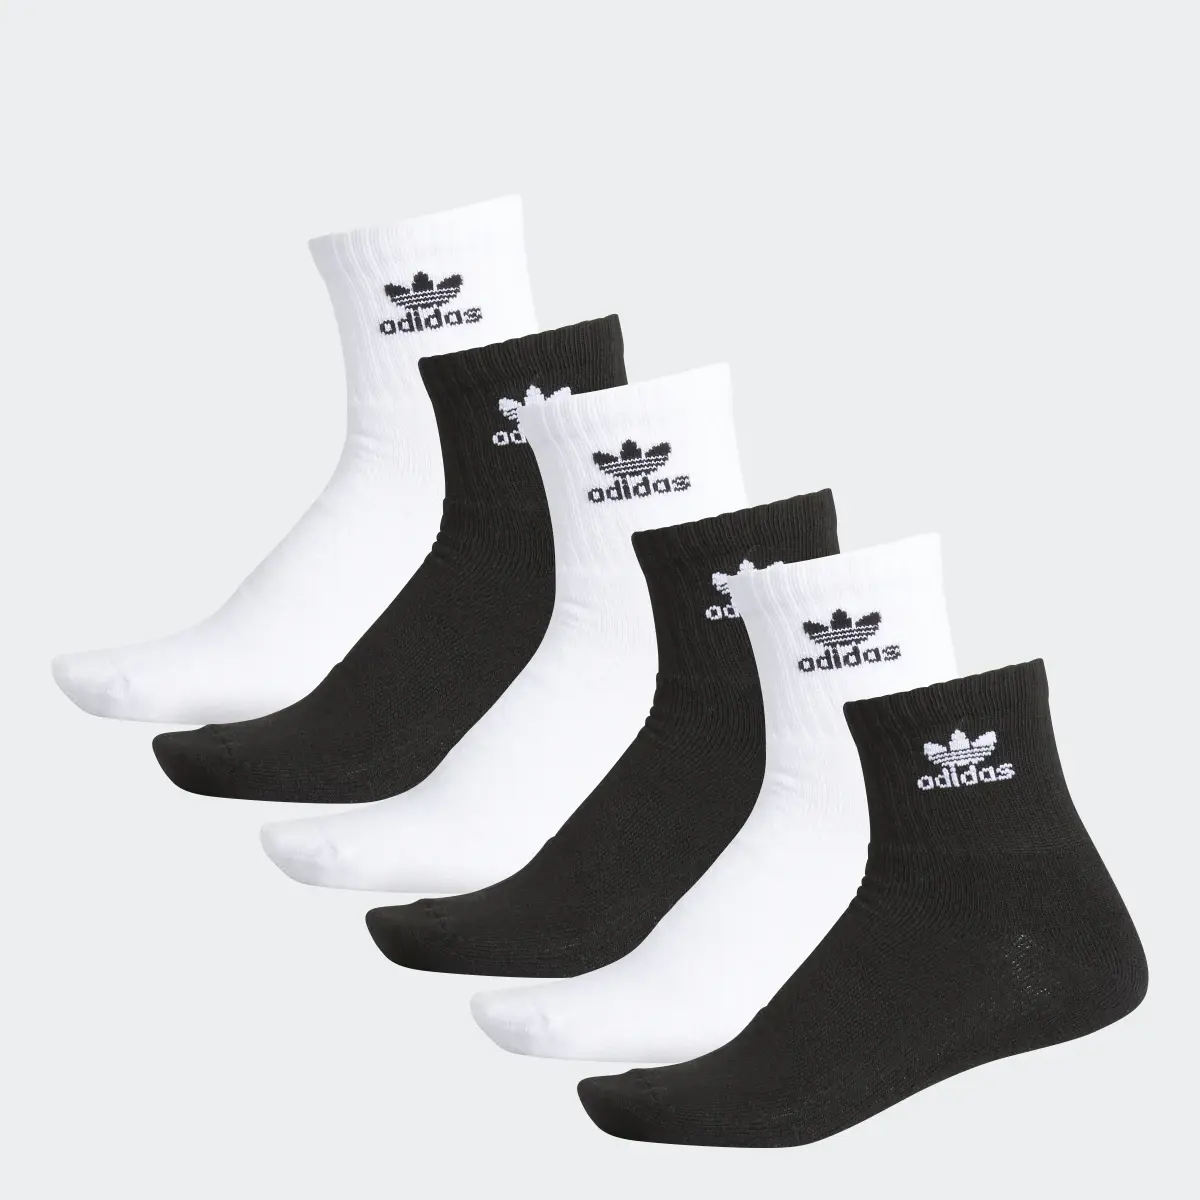 Adidas Trefoil Quarter Socks 3 Pairs. 1